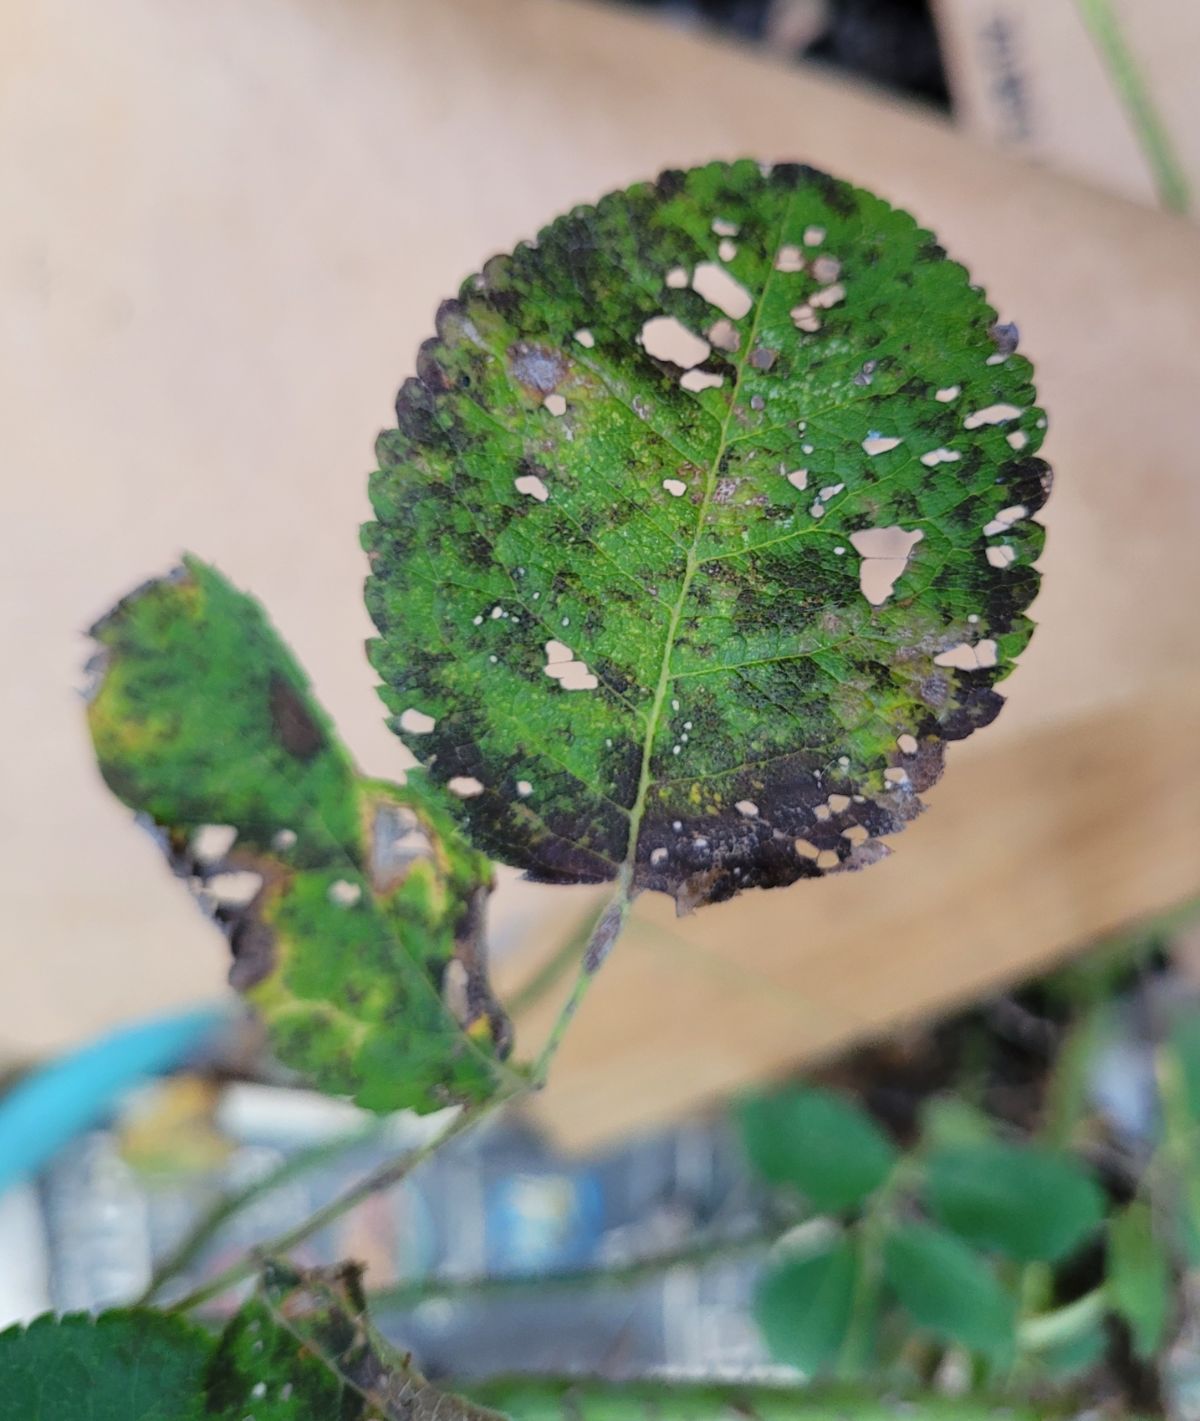 A rose leaf with blackspot and Japanese beetle damage